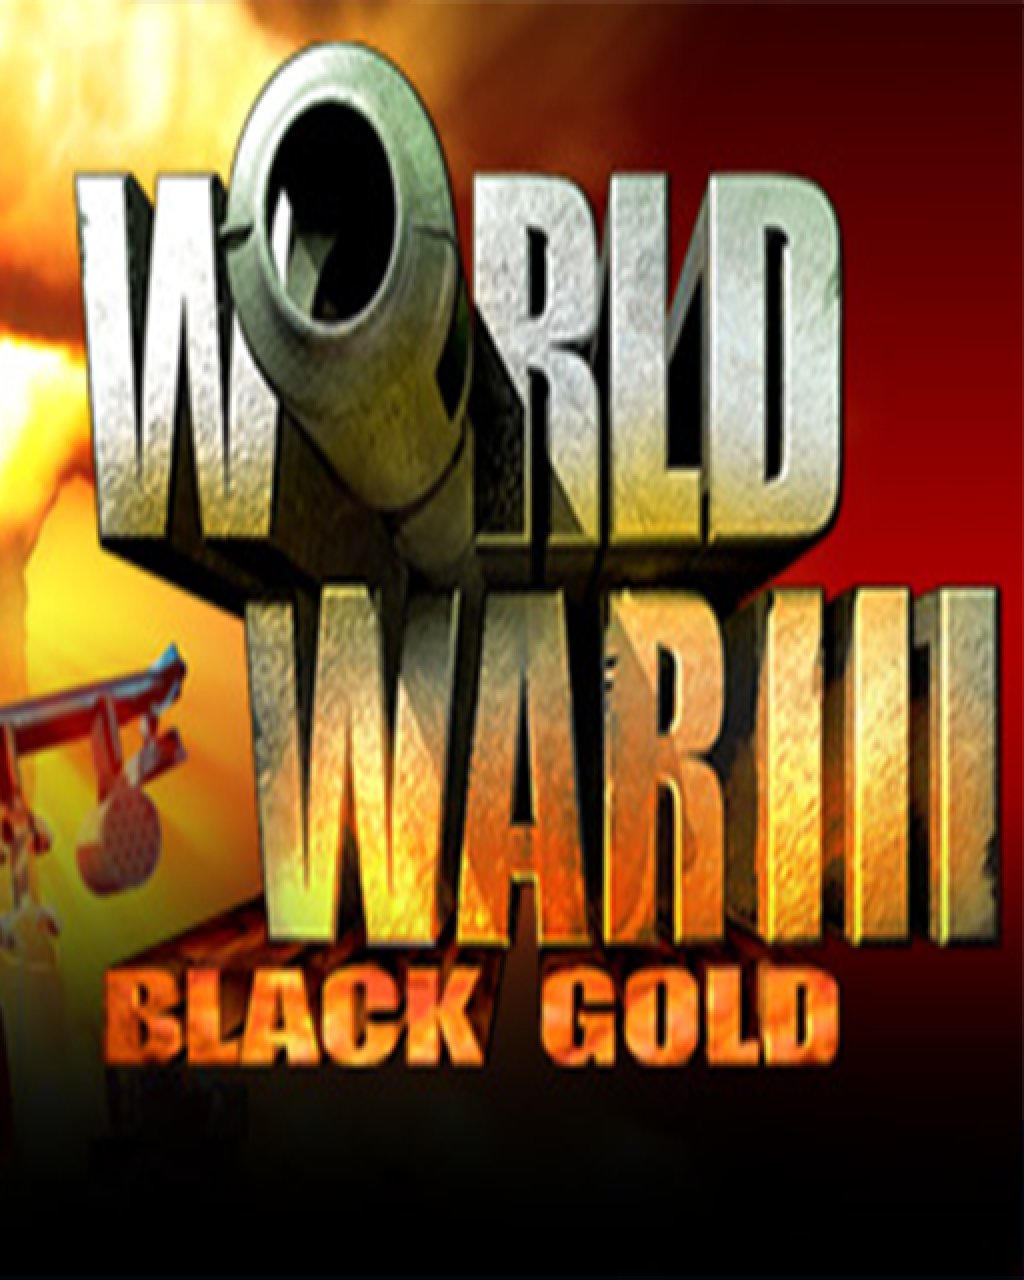 World War III Black Gold